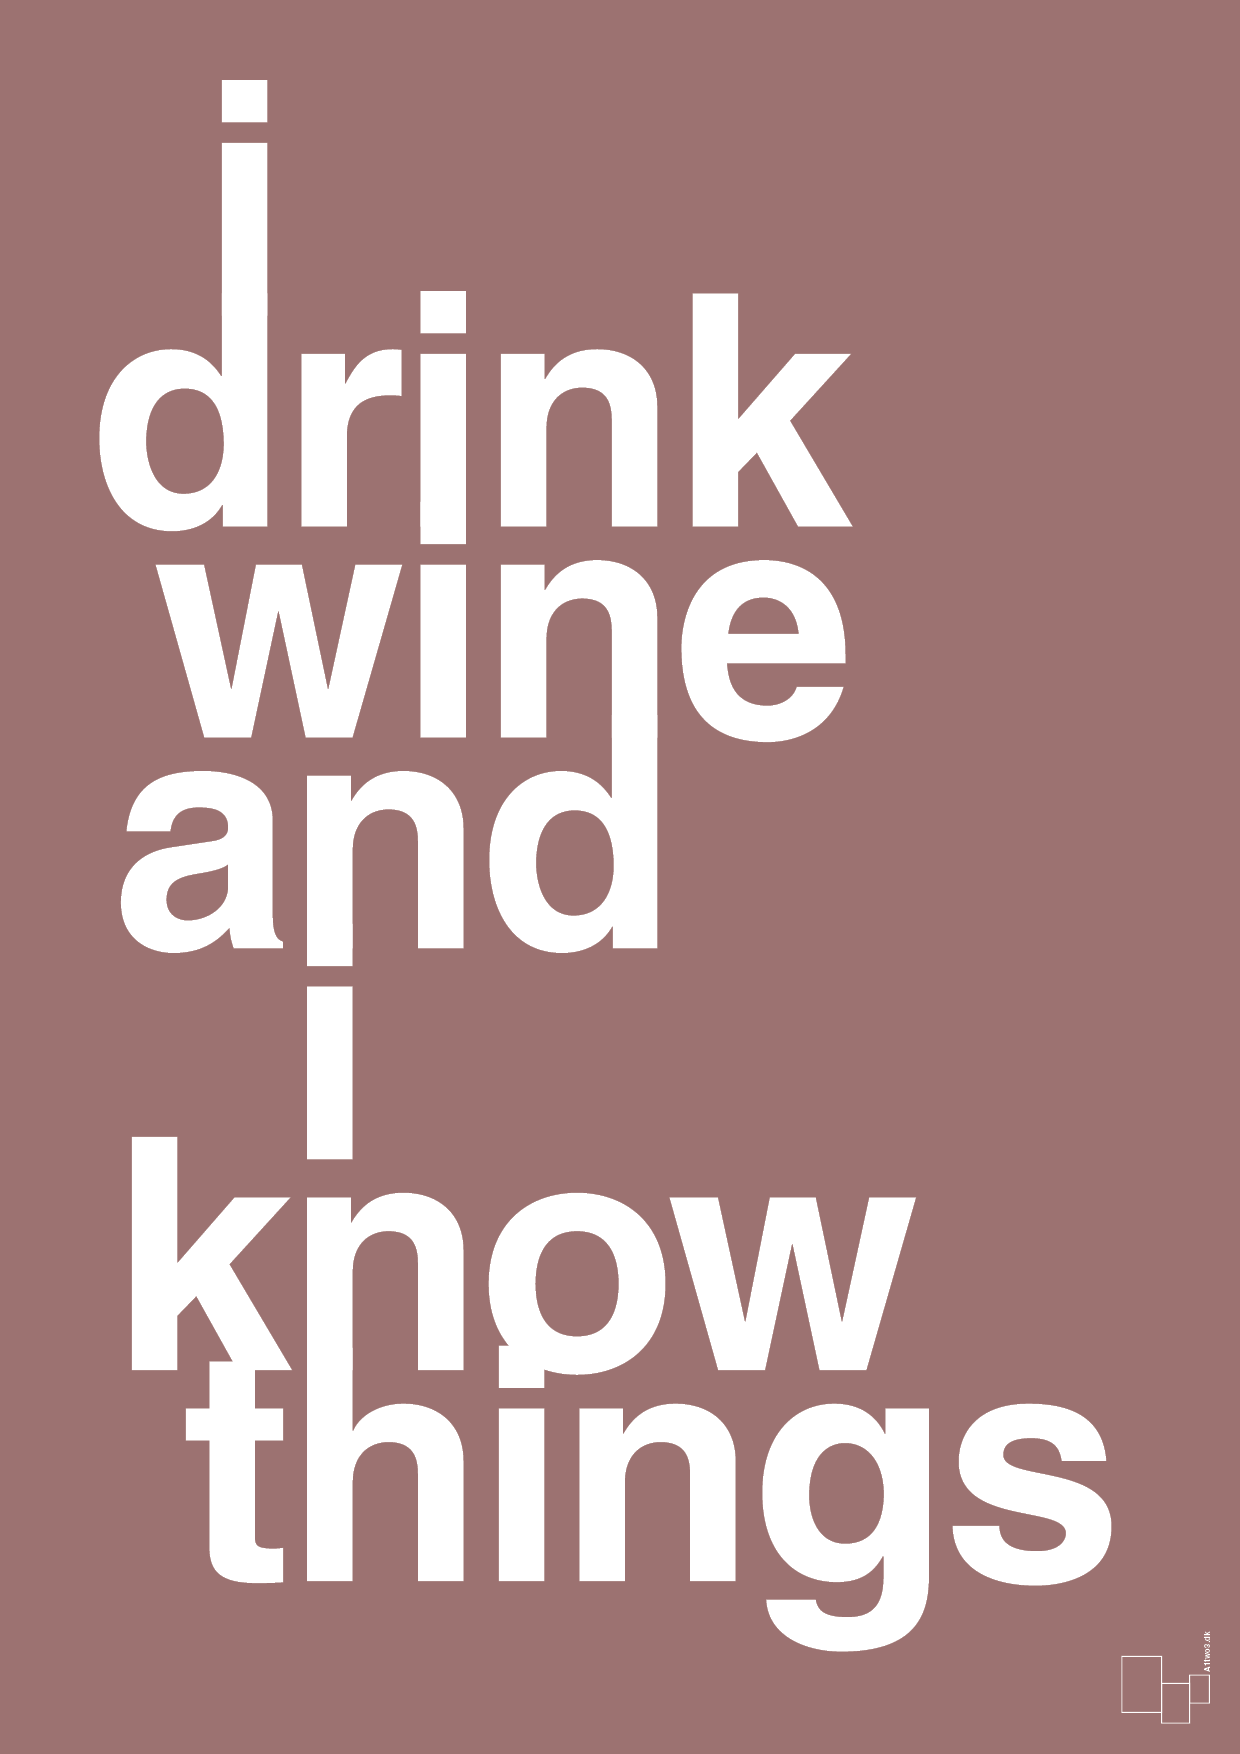 i drink wine and i know things - Plakat med Ordsprog i Plum